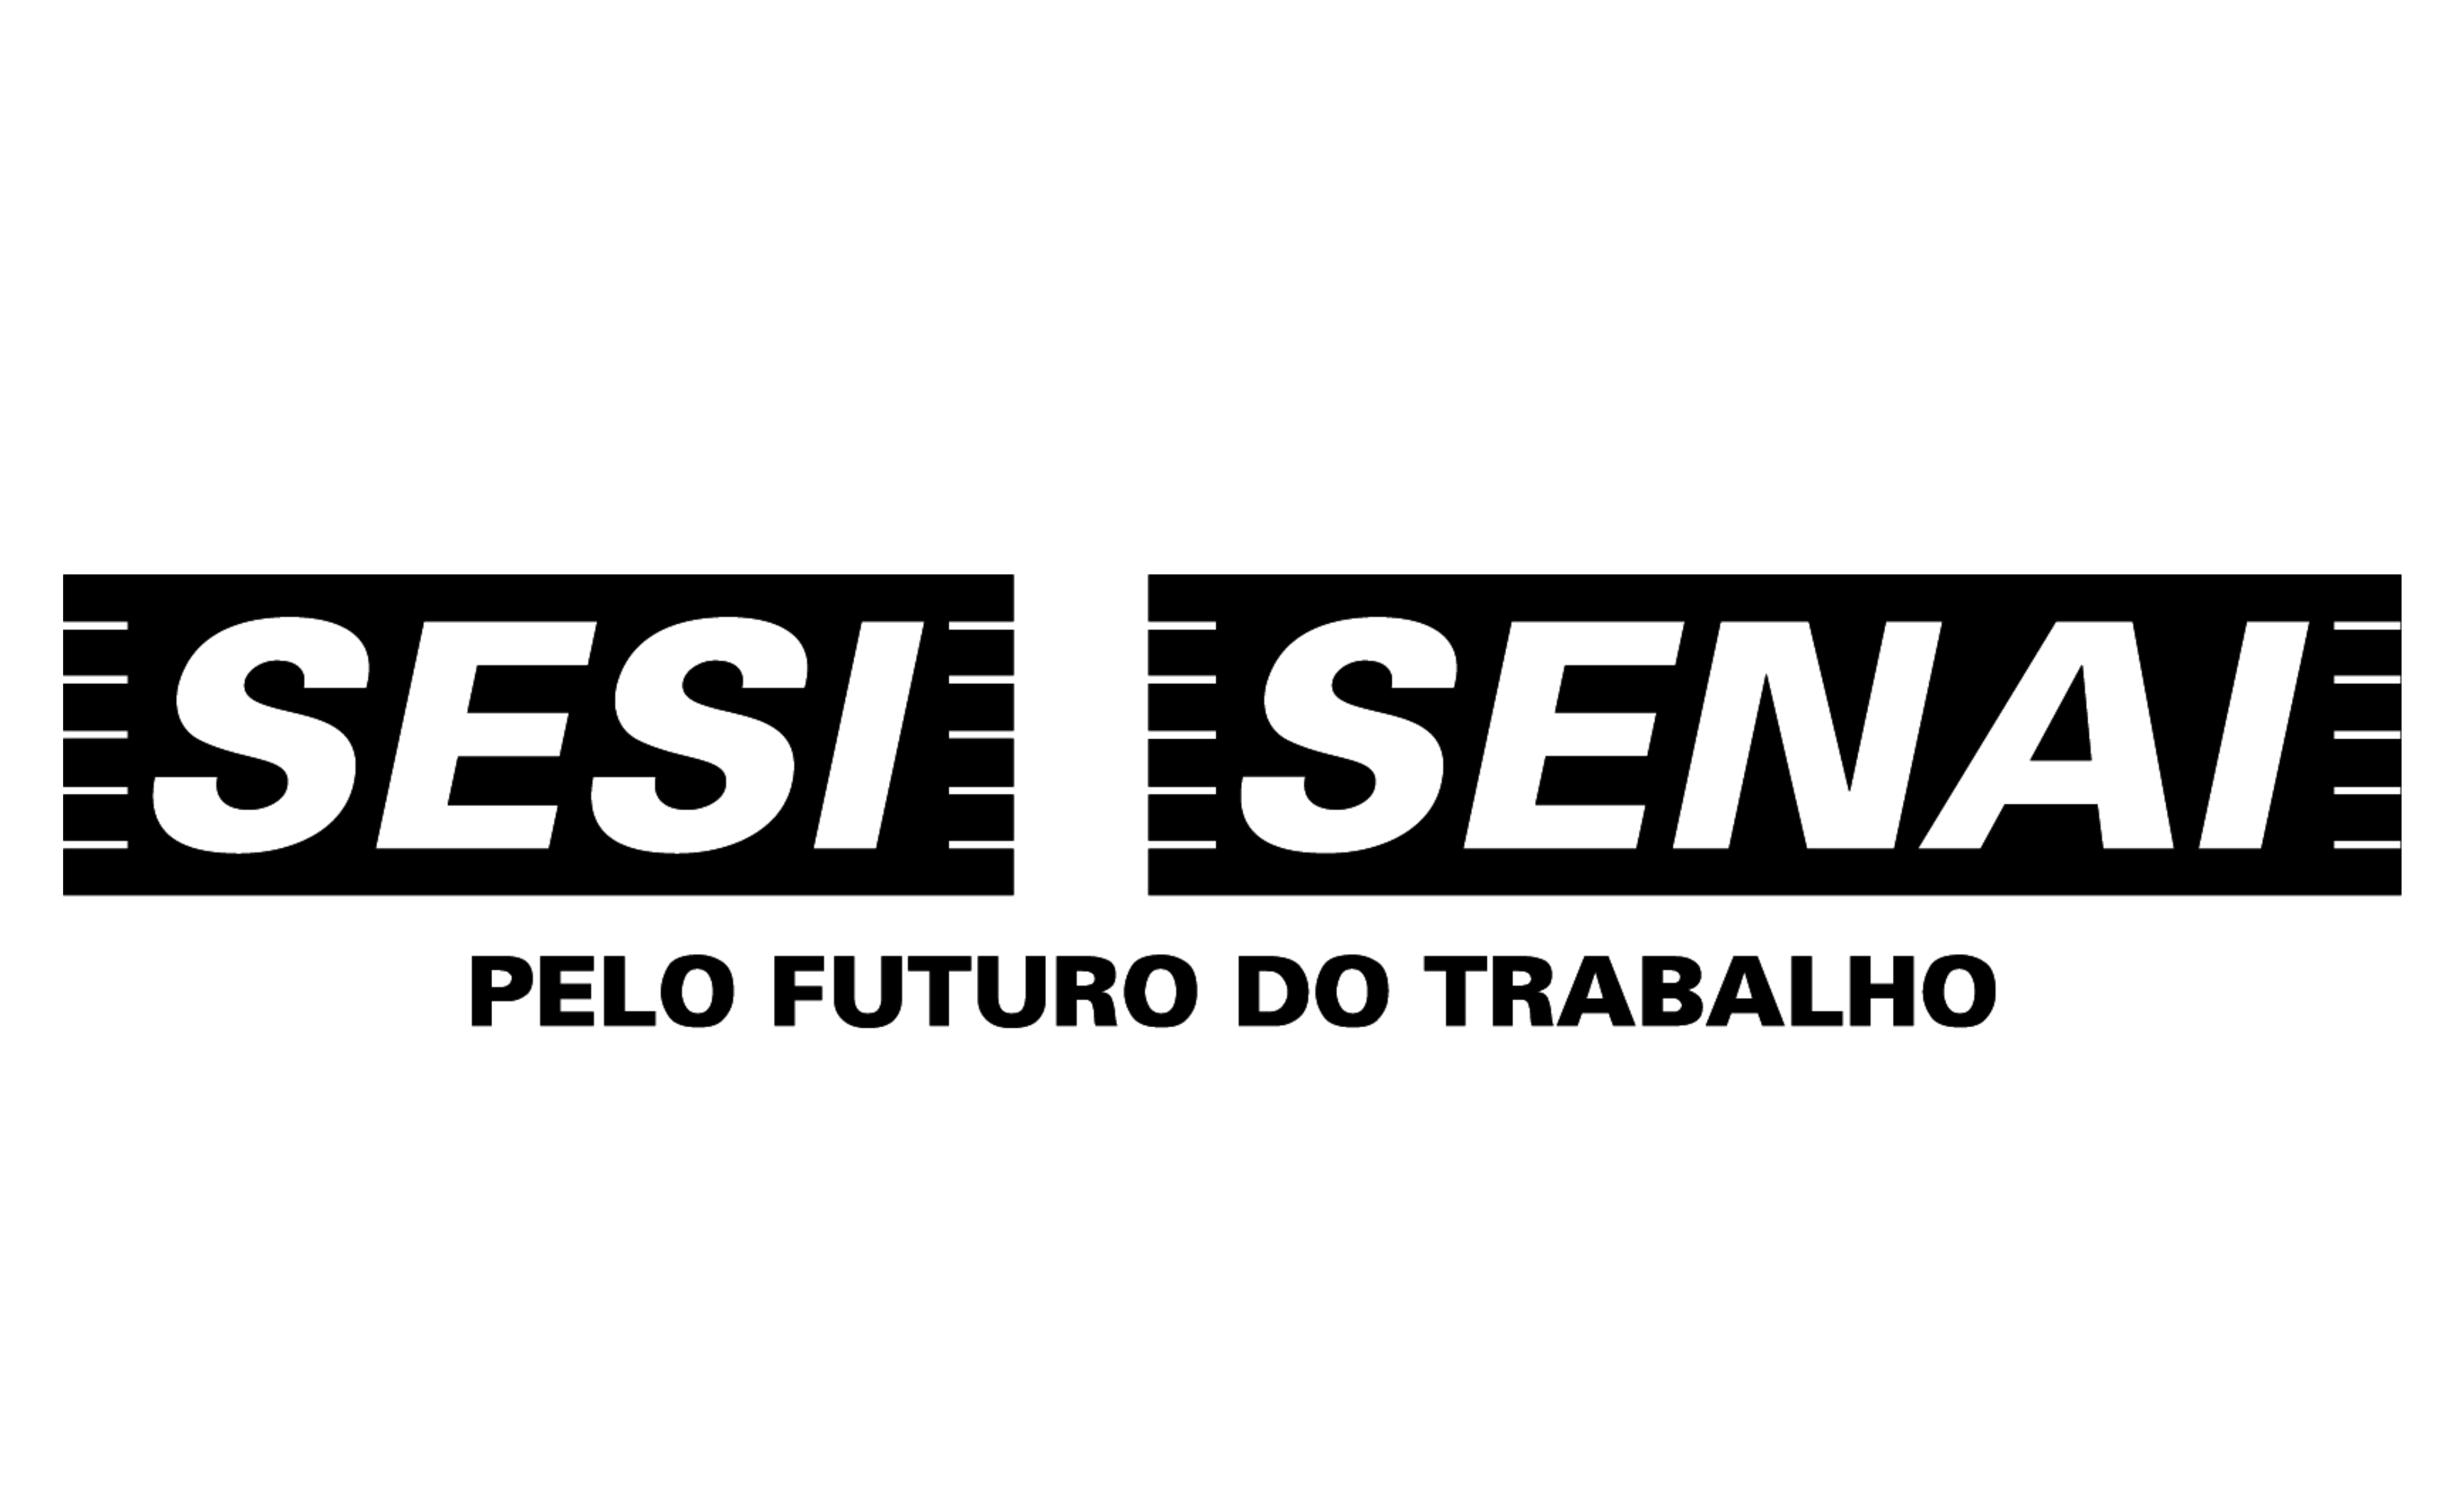 Logo Sesi Senai